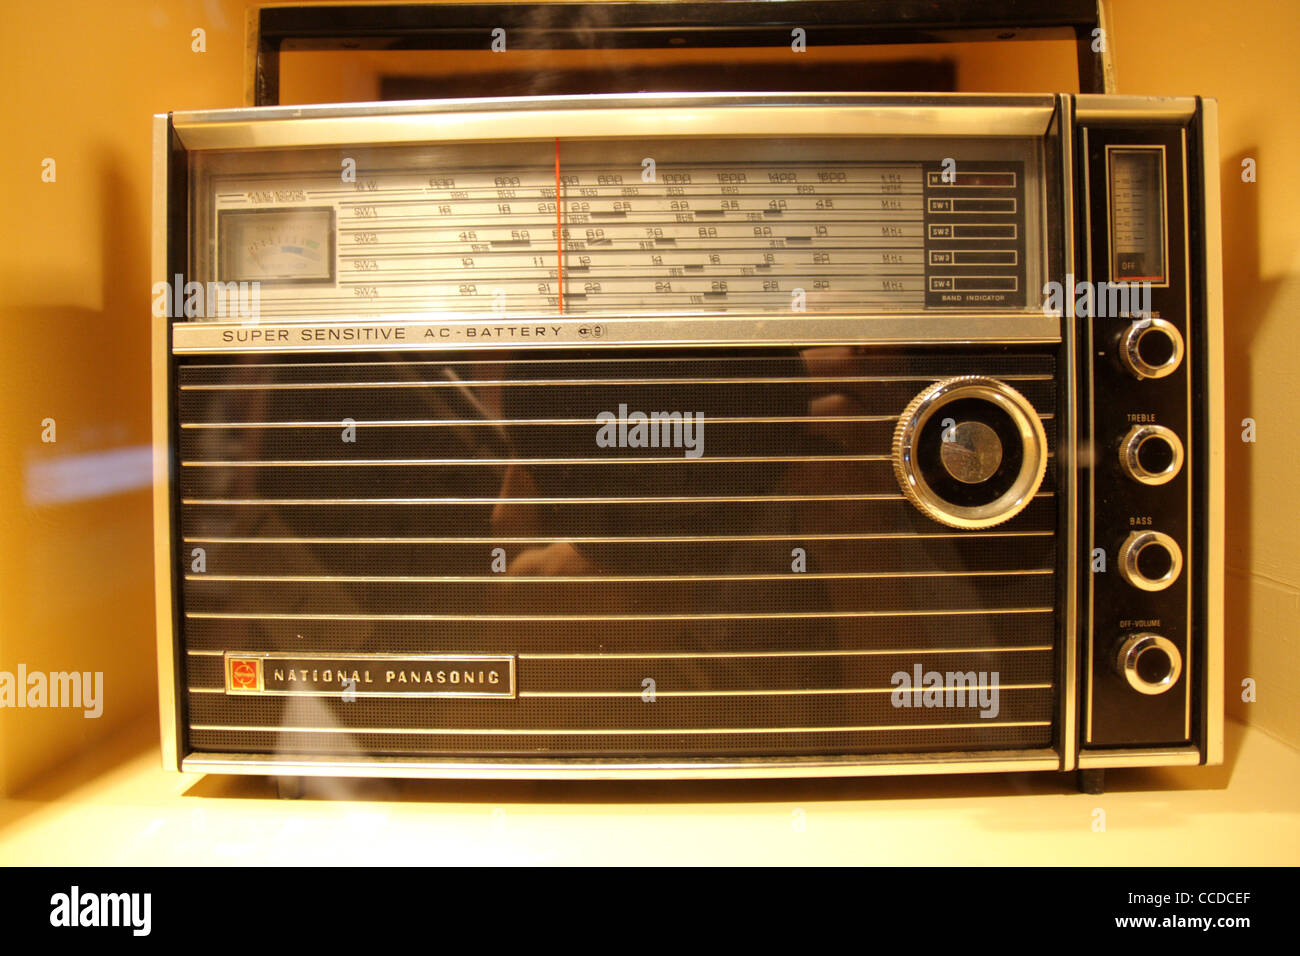 Old National Panasonic radio Stock Photo - Alamy